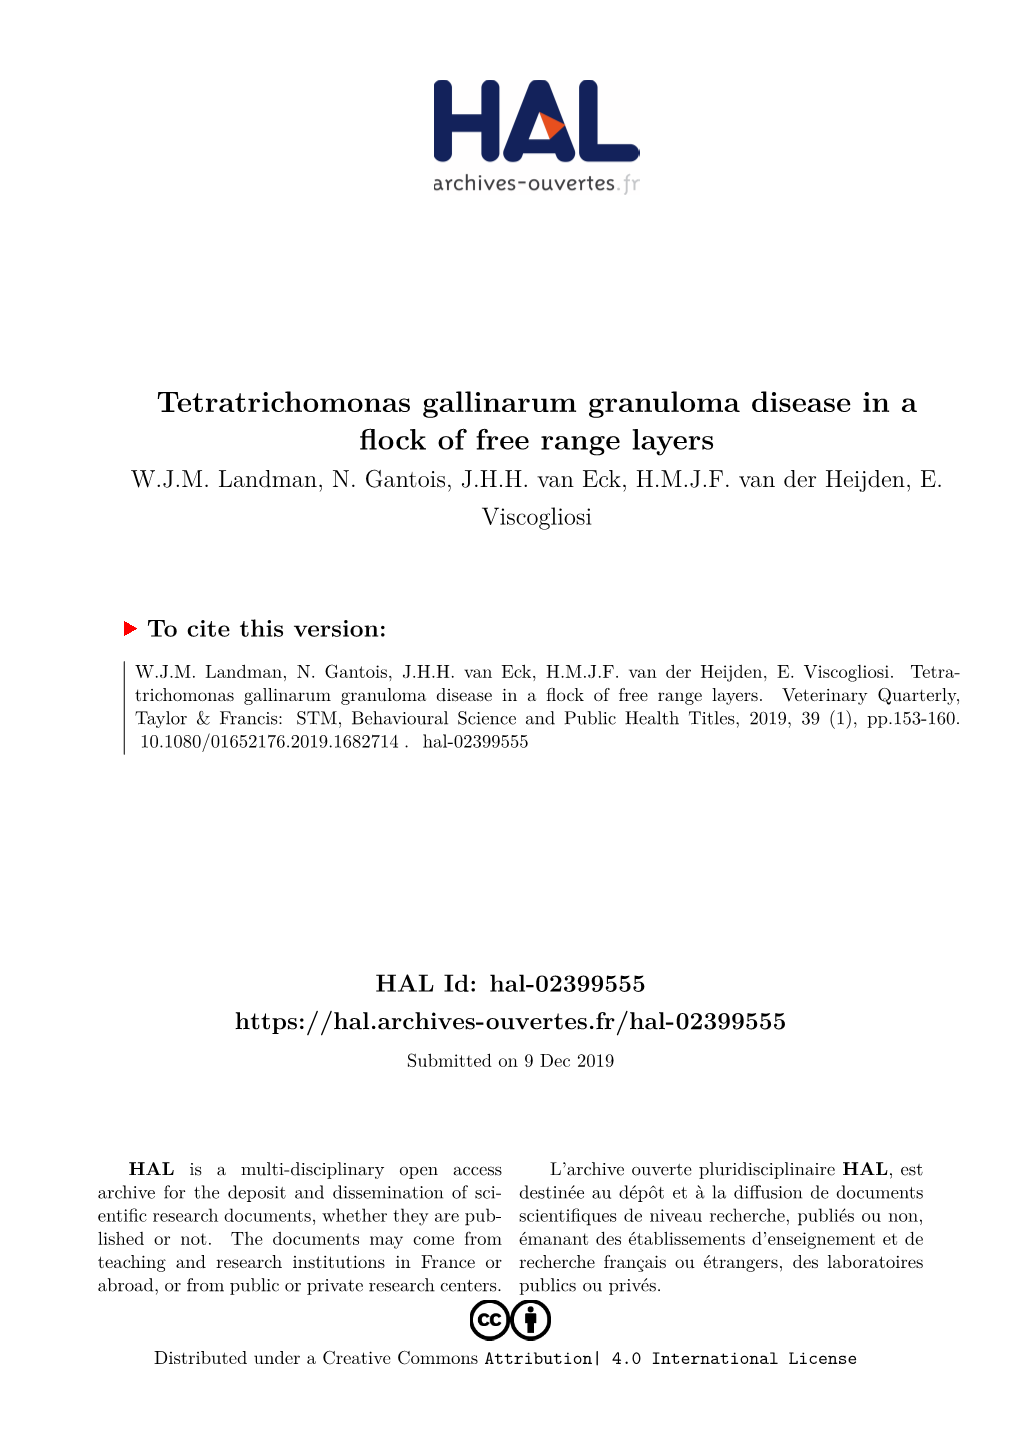 Tetratrichomonas Gallinarum Granuloma Disease in a Flock of Free Range Layers W.J.M